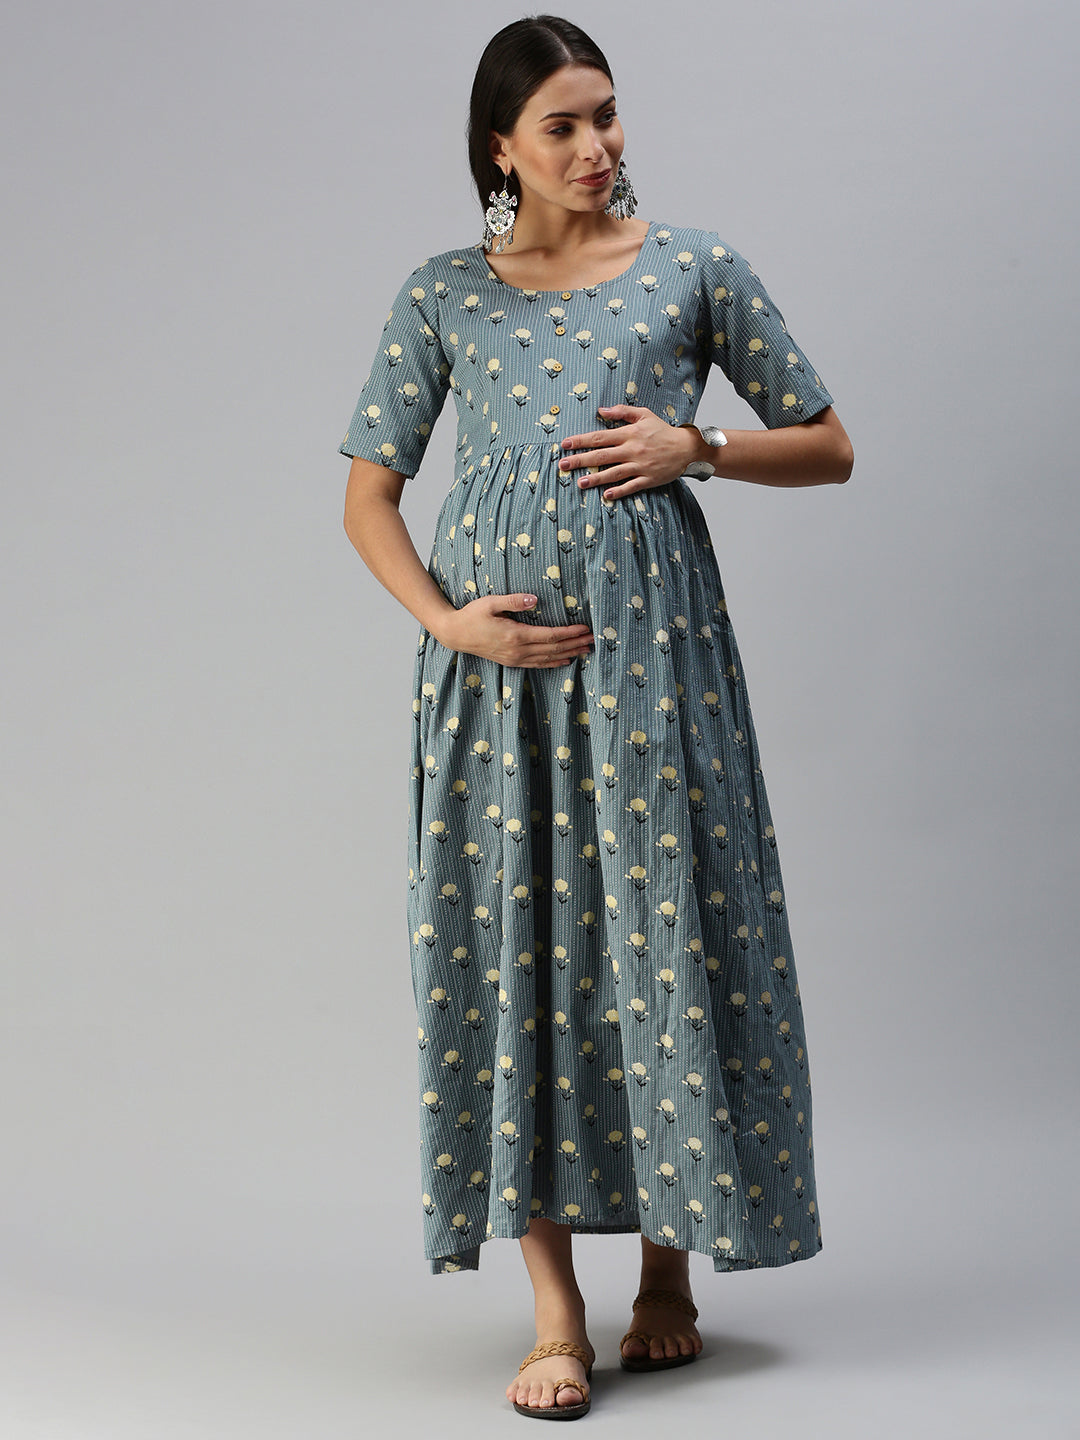 Women's Maternity Maxi Dresses